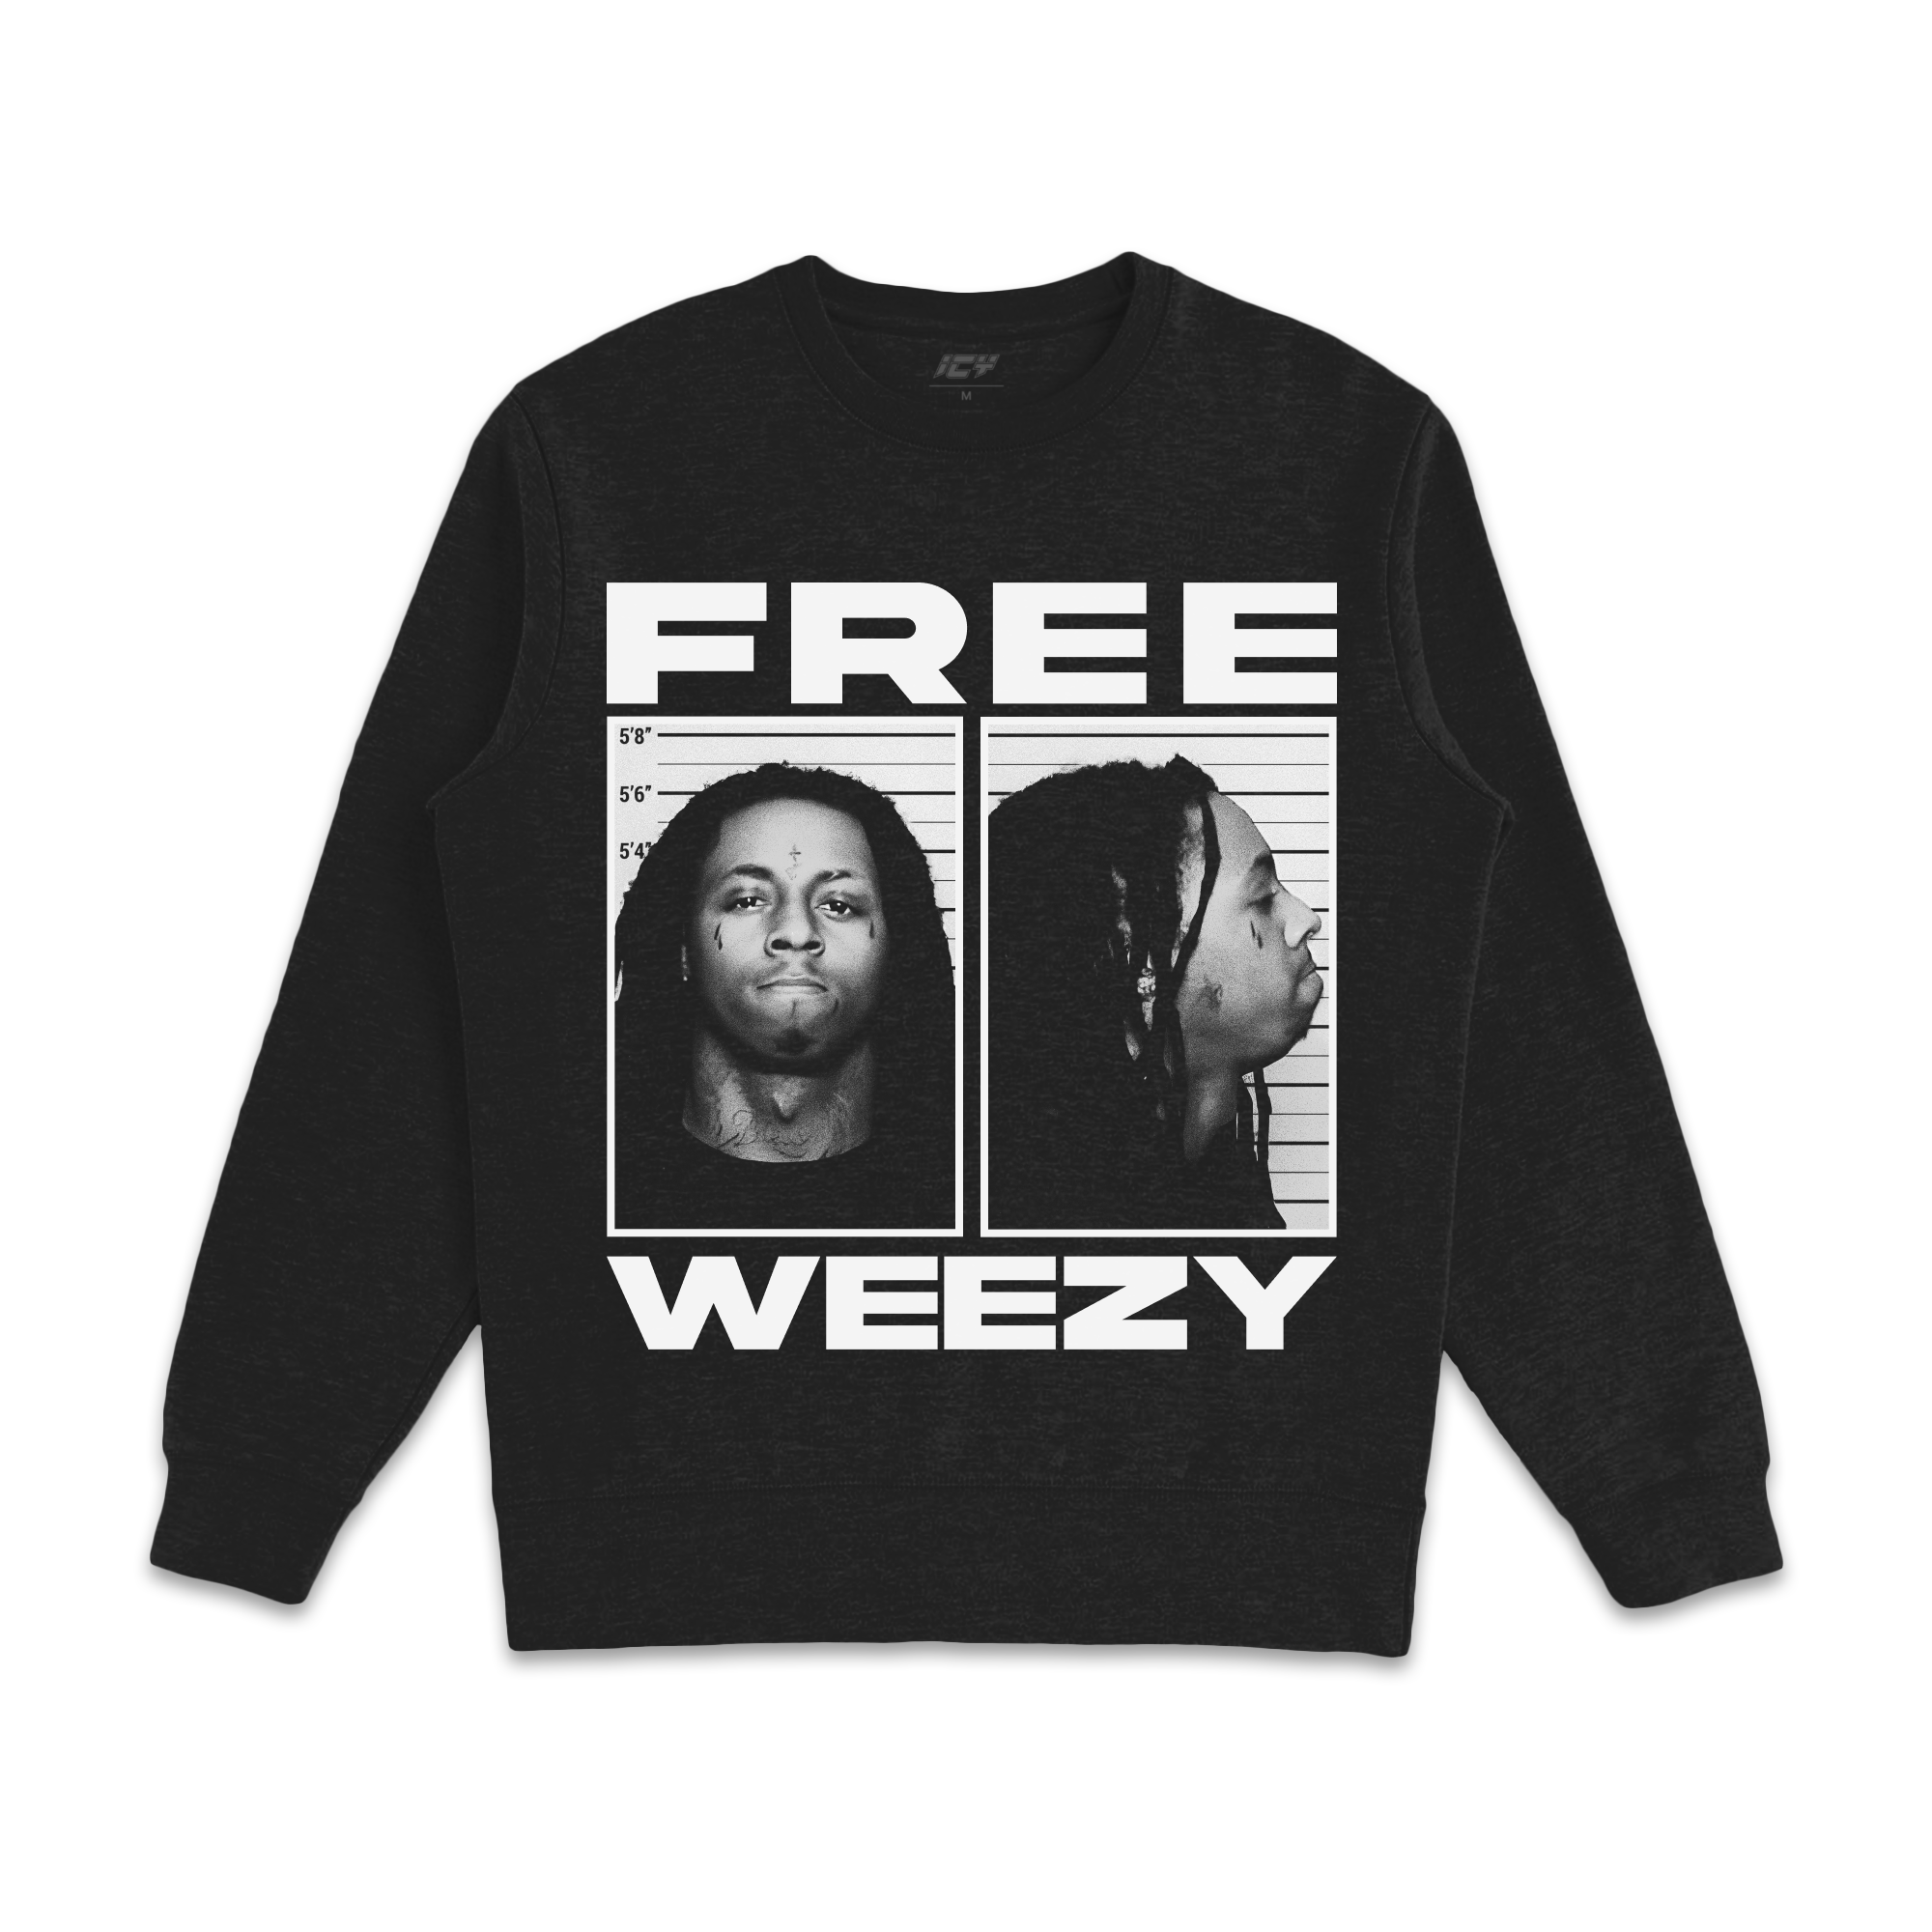 Lil Wayne "Free Weezy" Crewneck Sweatshirt